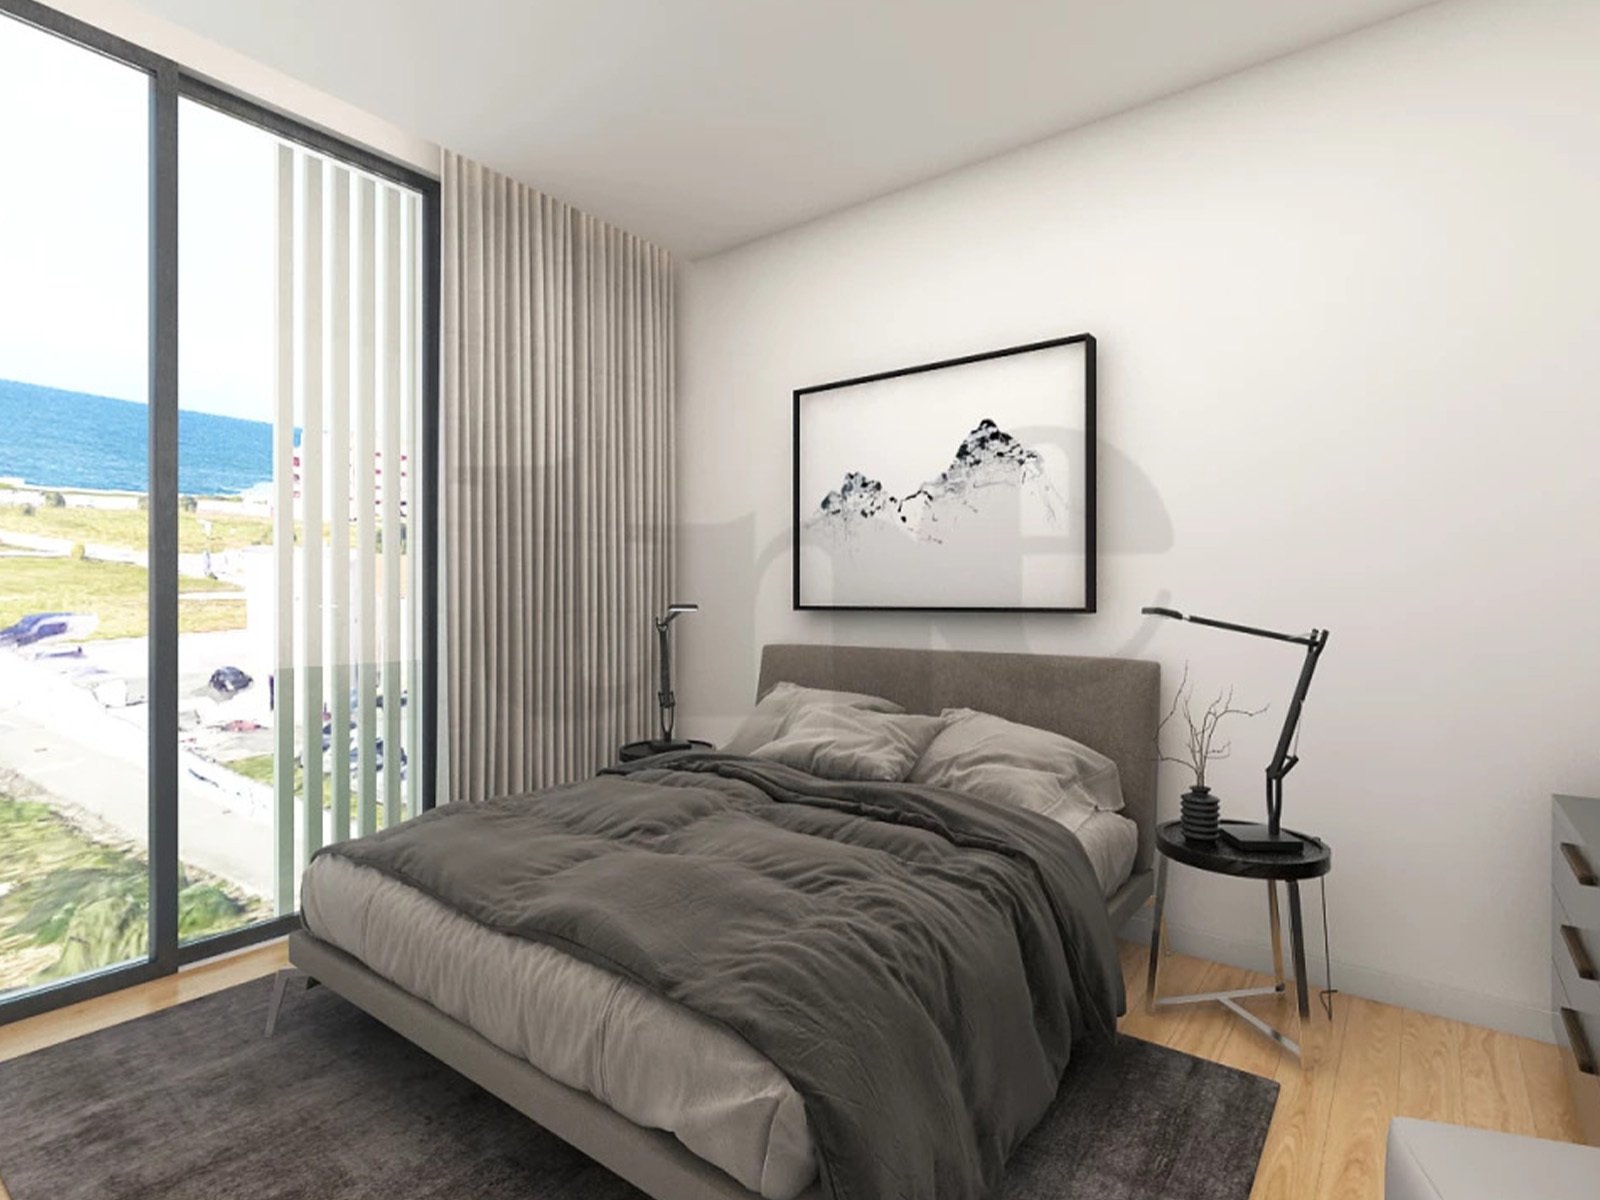 3 bedroom apartment with 194 sq m in Leça da Palmeira 2903438956